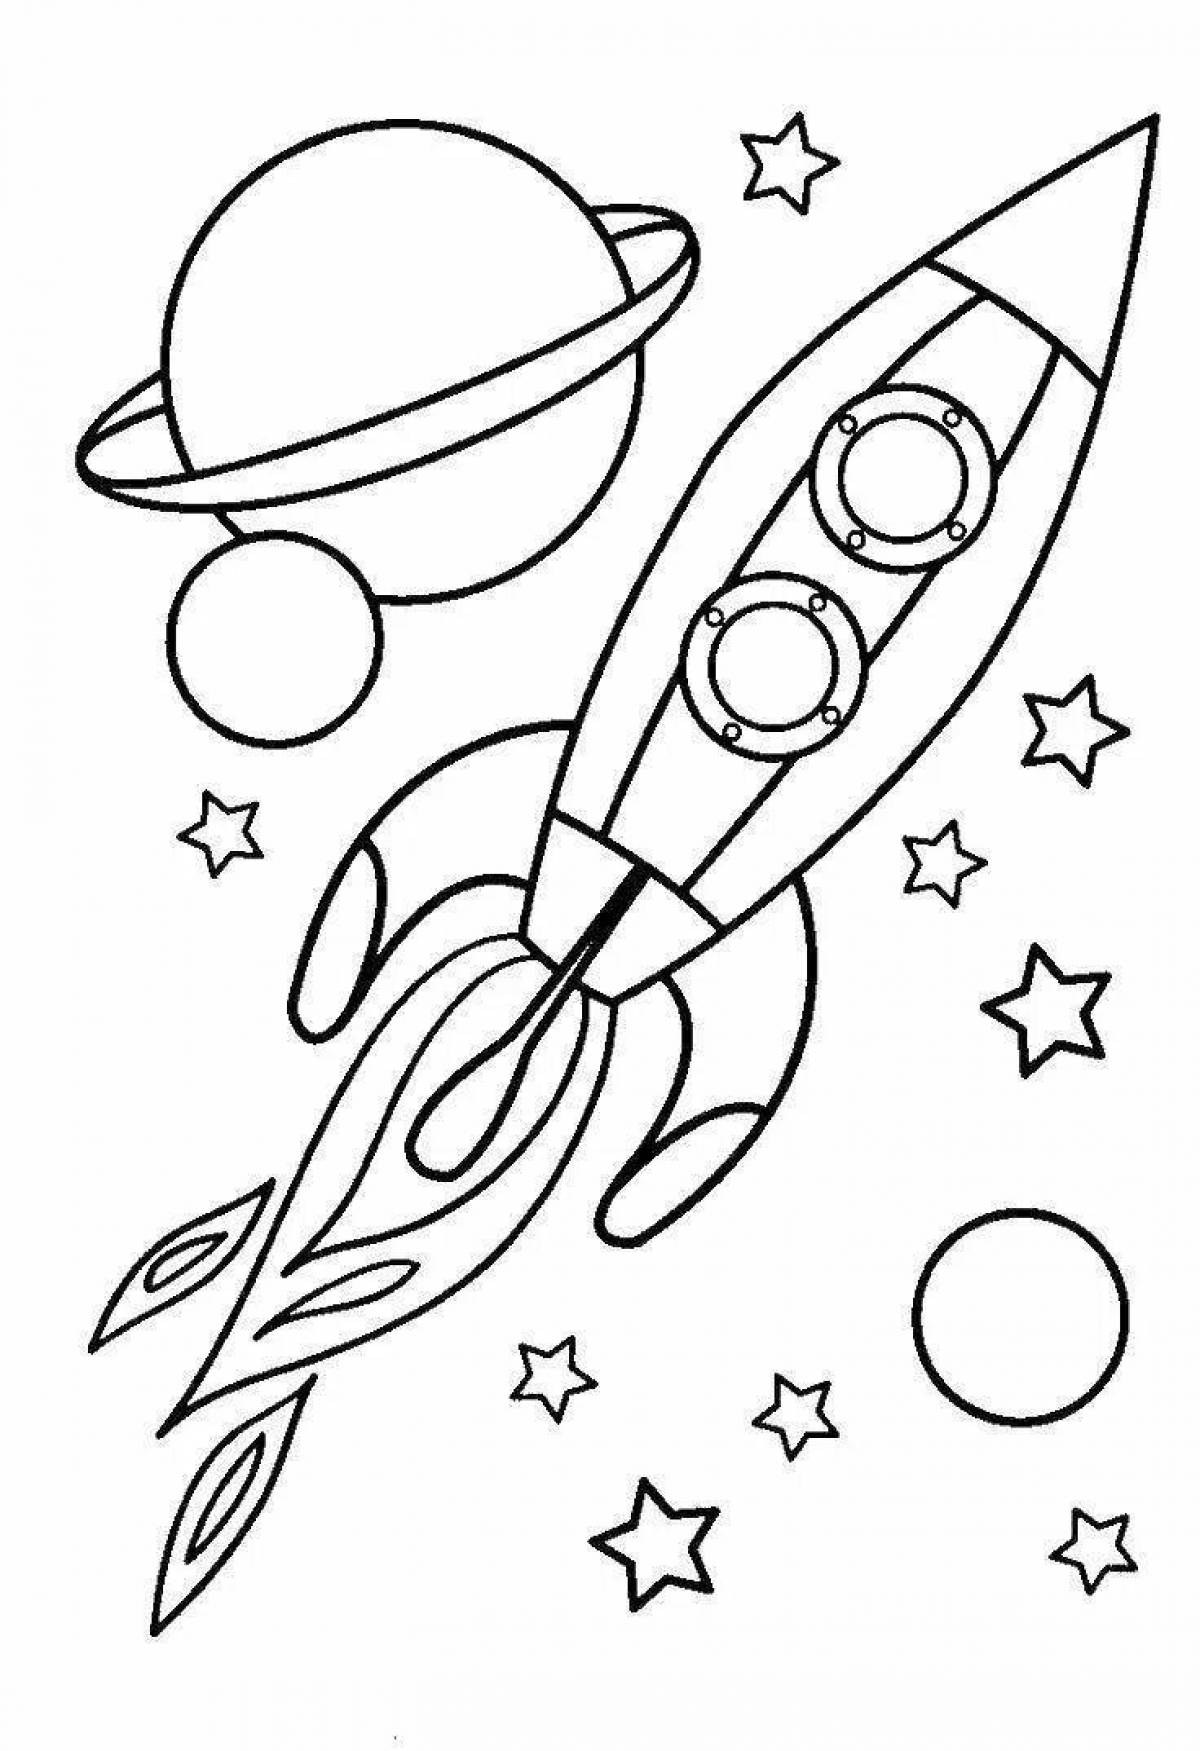 Cosmonautics Day coloring page